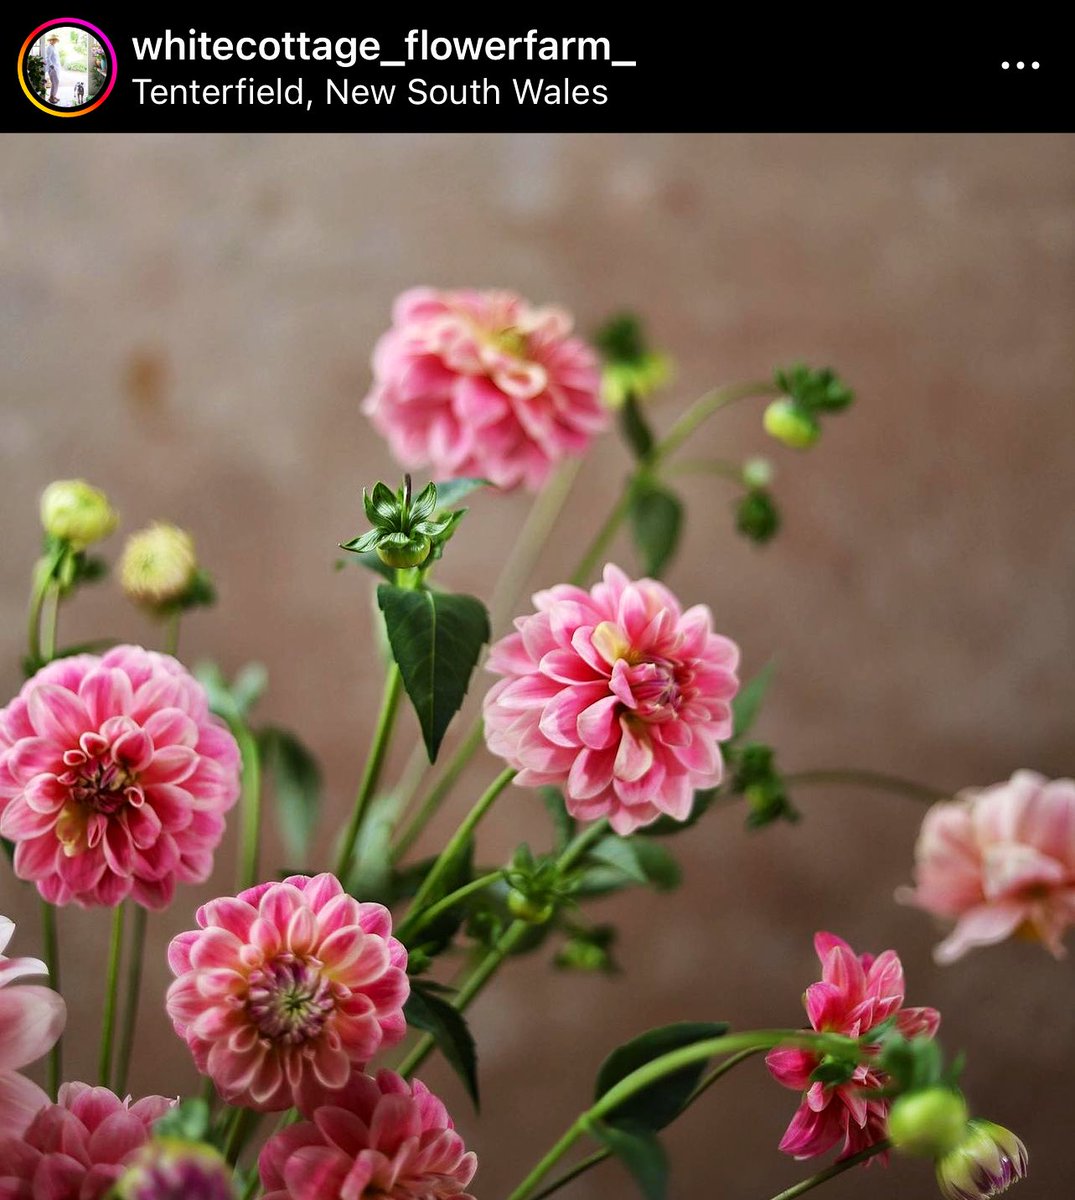 Whitecottage_flowerfarm_ NSW is next level stunning!